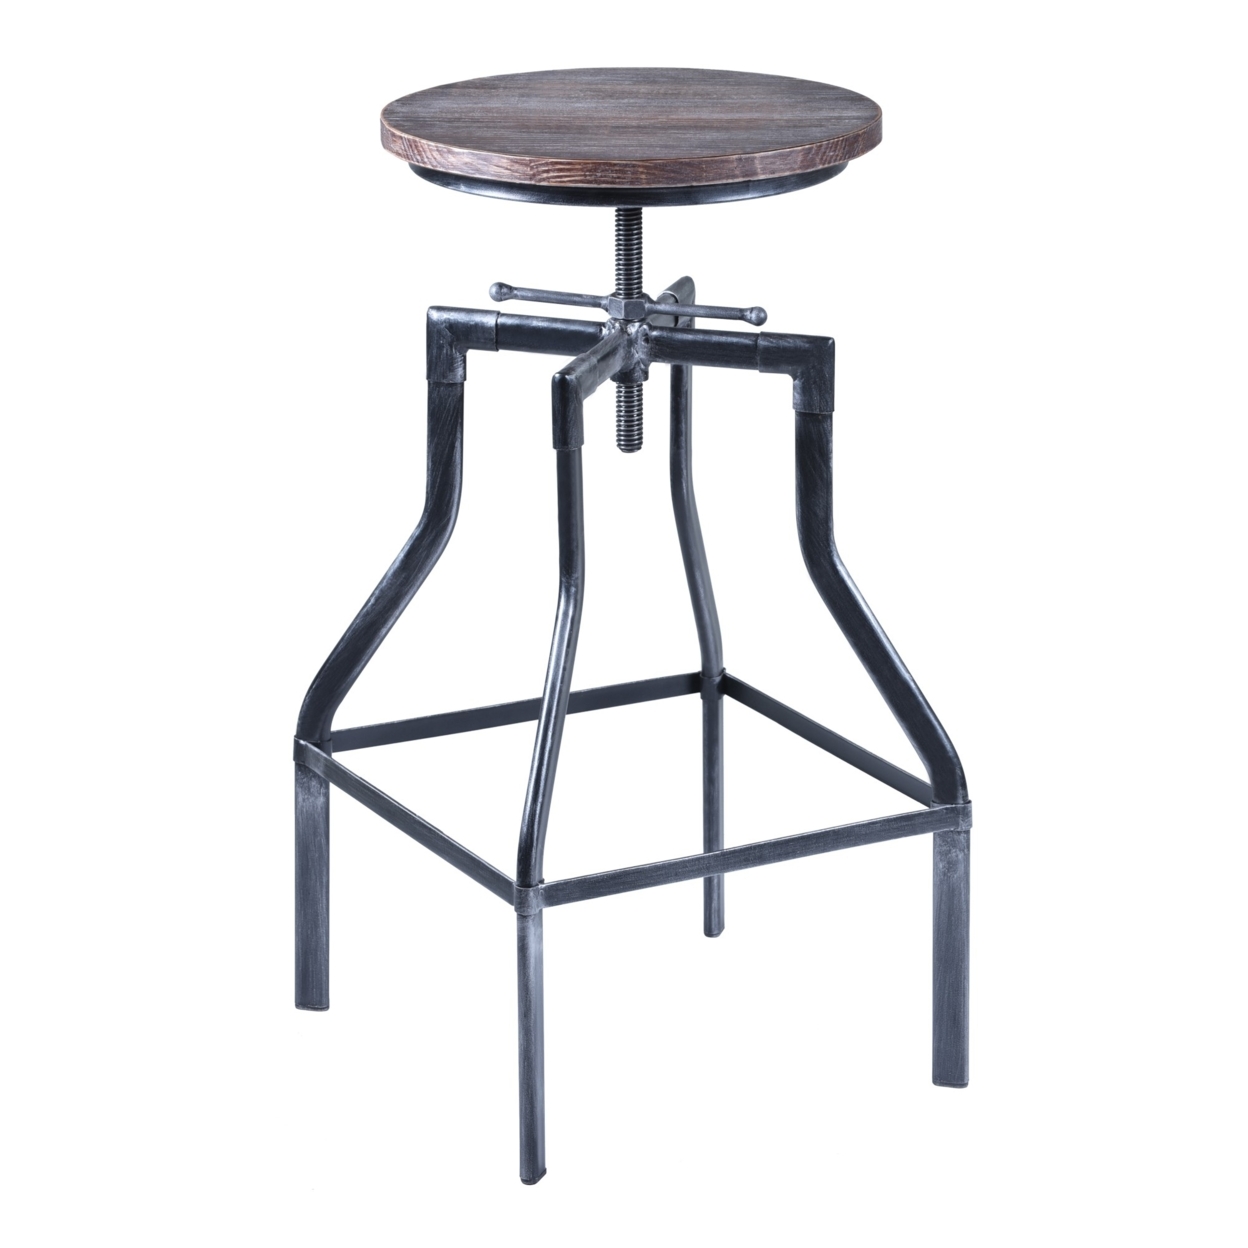 Round Wood Top Adjustable Barstool With Sculpted Metal Legs, Gray- Saltoro Sherpi